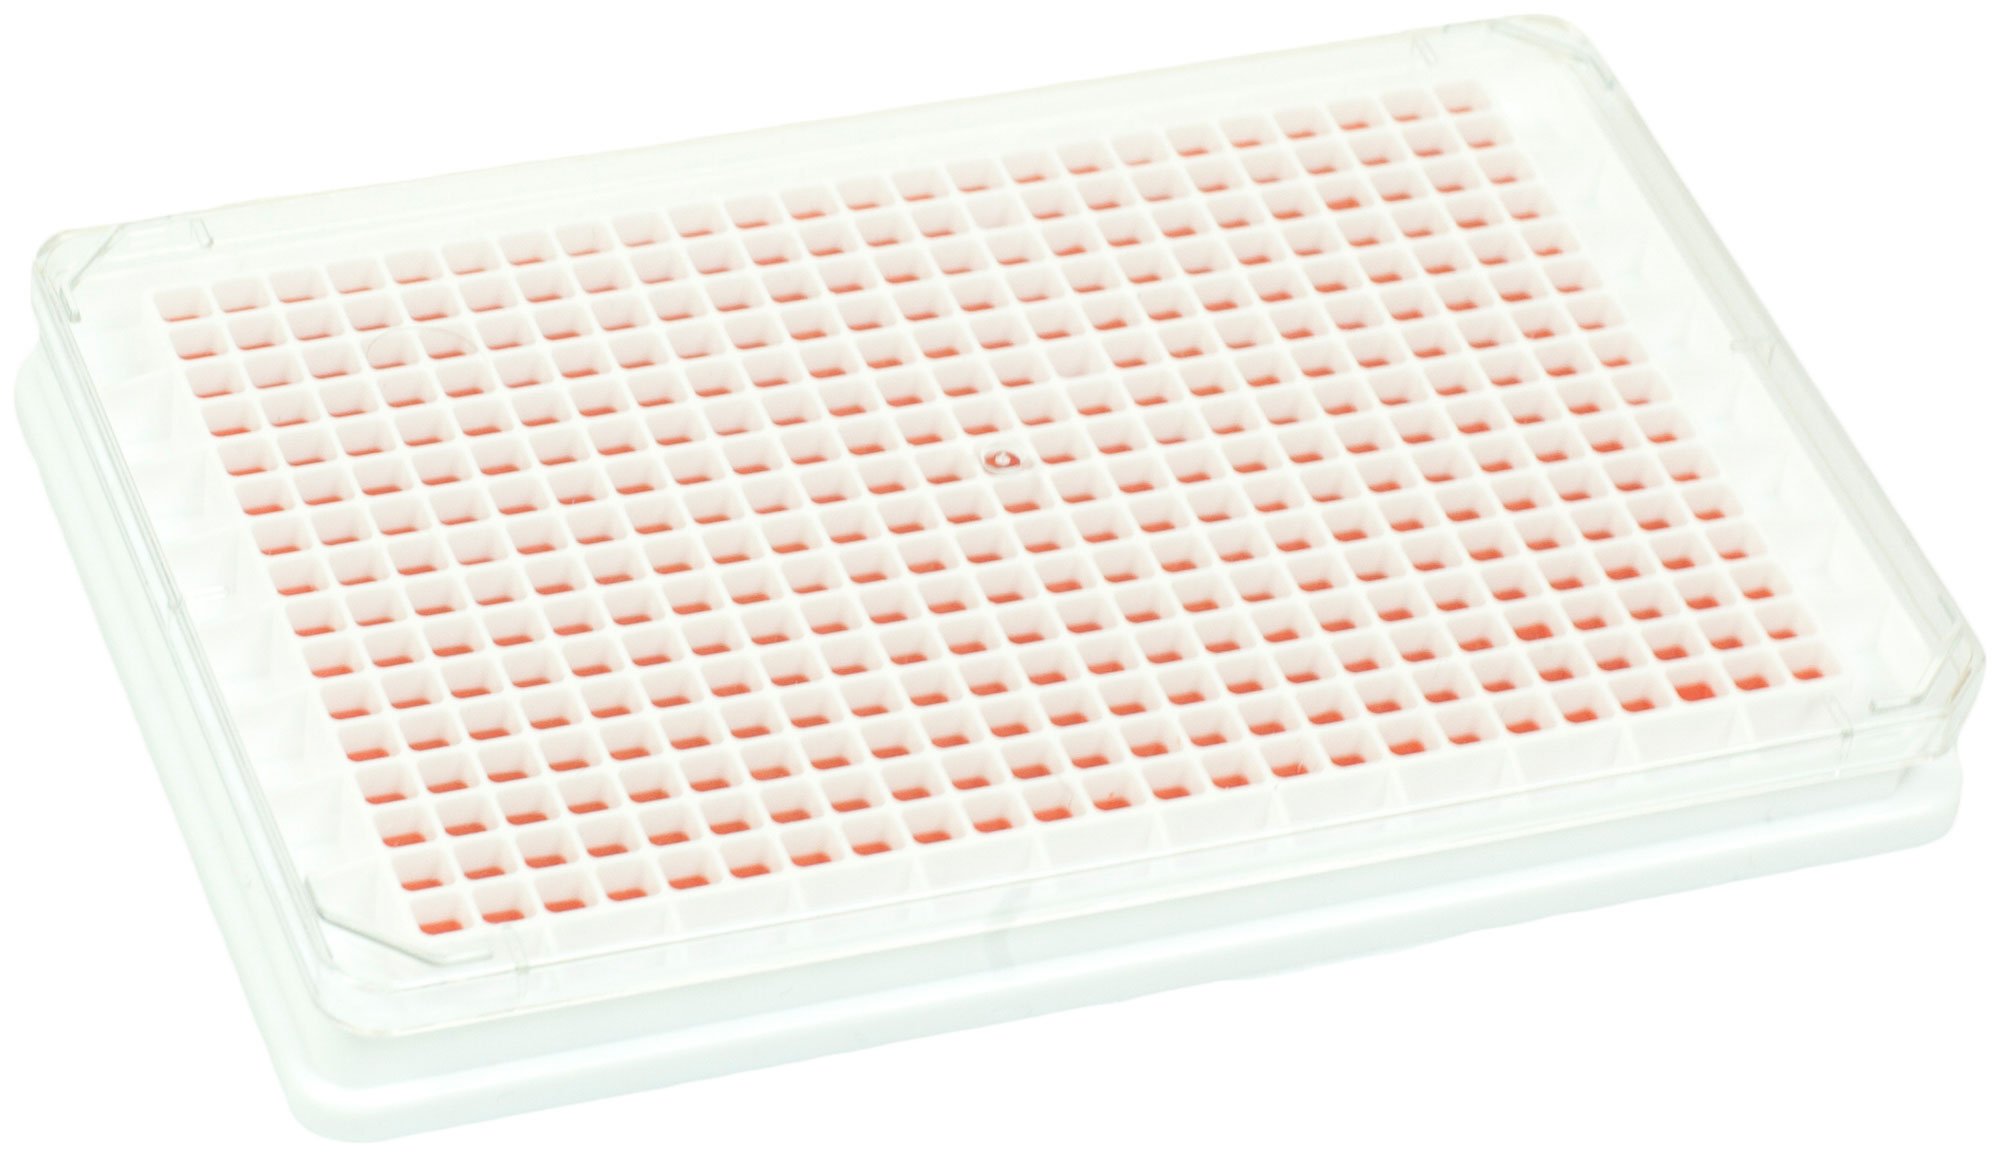 BRANDplates cellGrade Treated Sterile Surface 384-Well Plate - White, F-Bottom